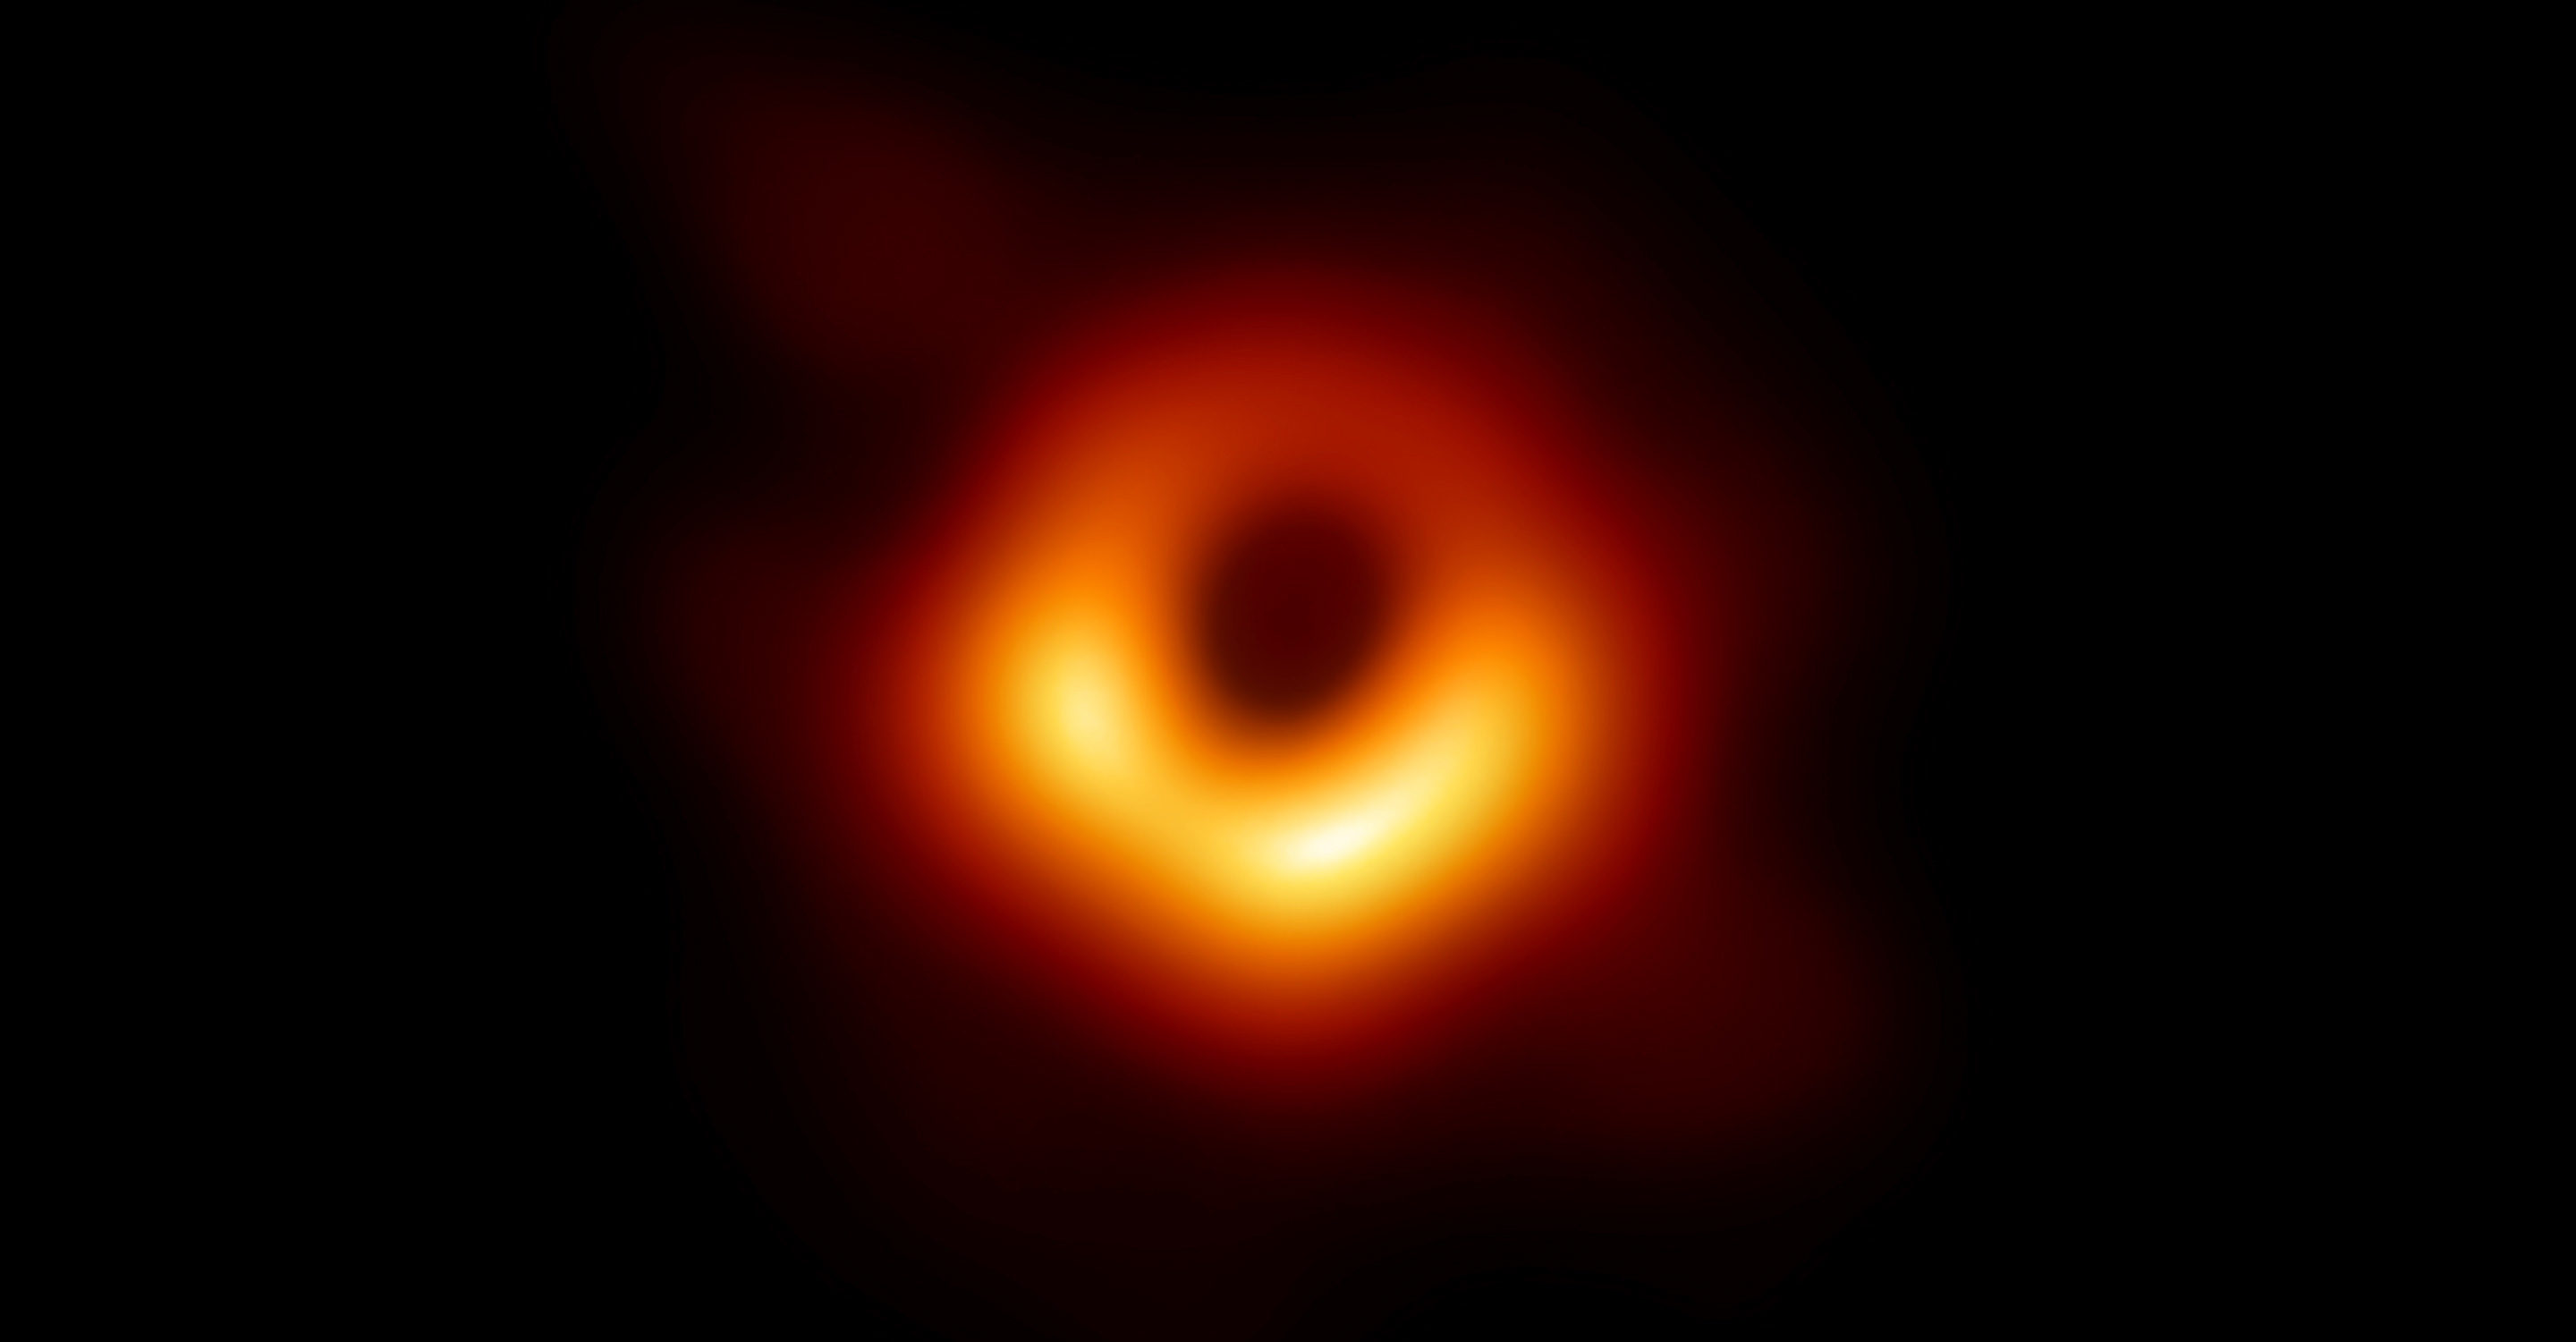 SCIET on Black Holes